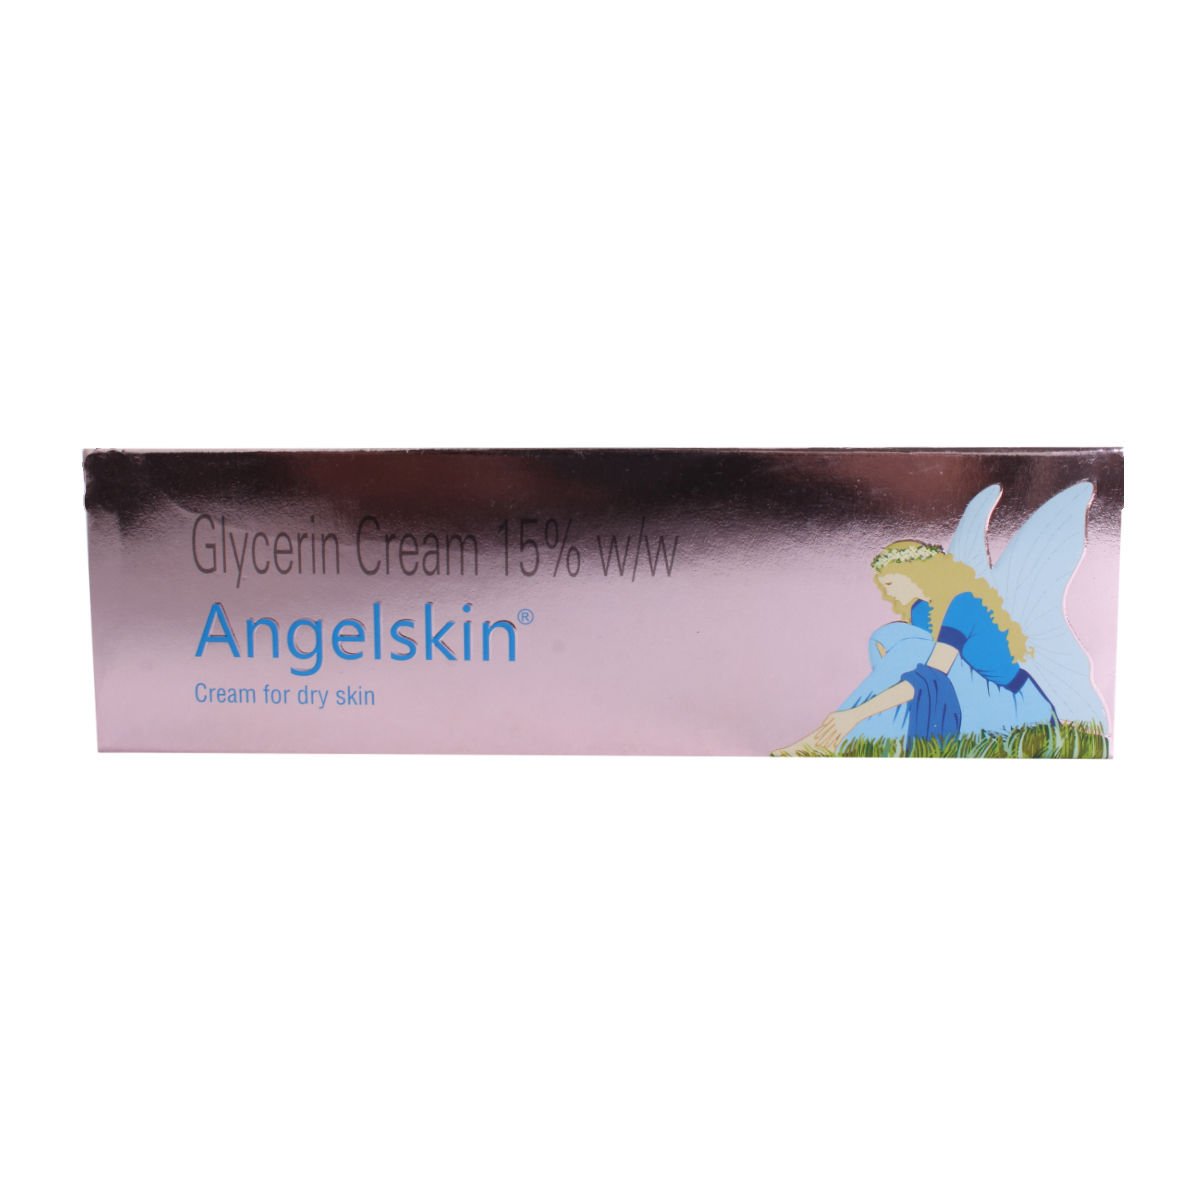 Angelskin Cream, 100 gm, Pack of 1 